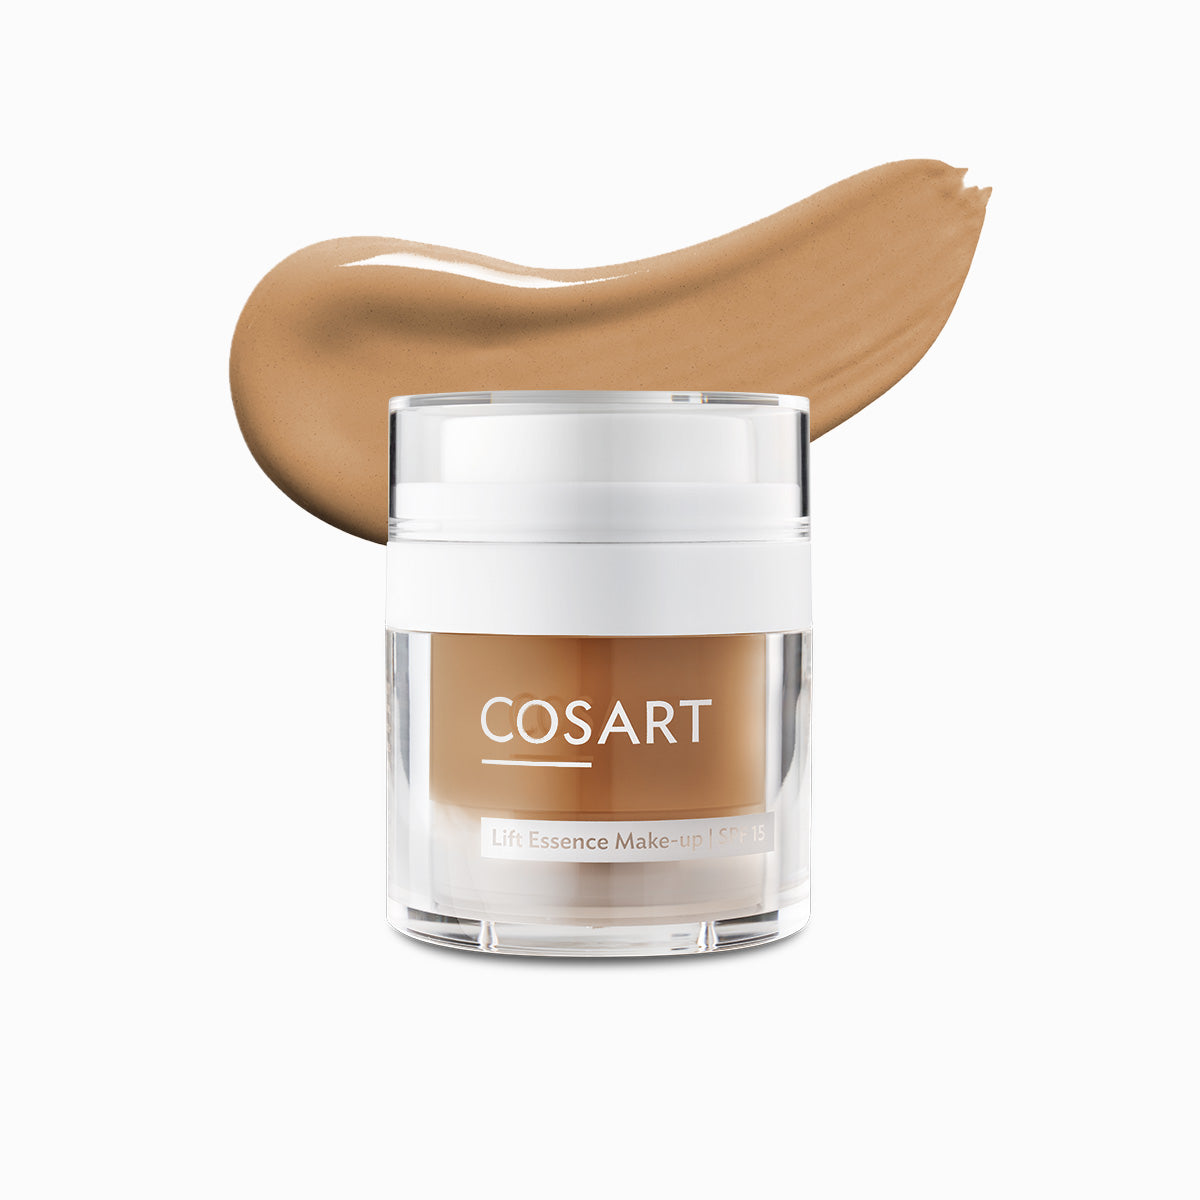 Cosart Lift Essence Make-up